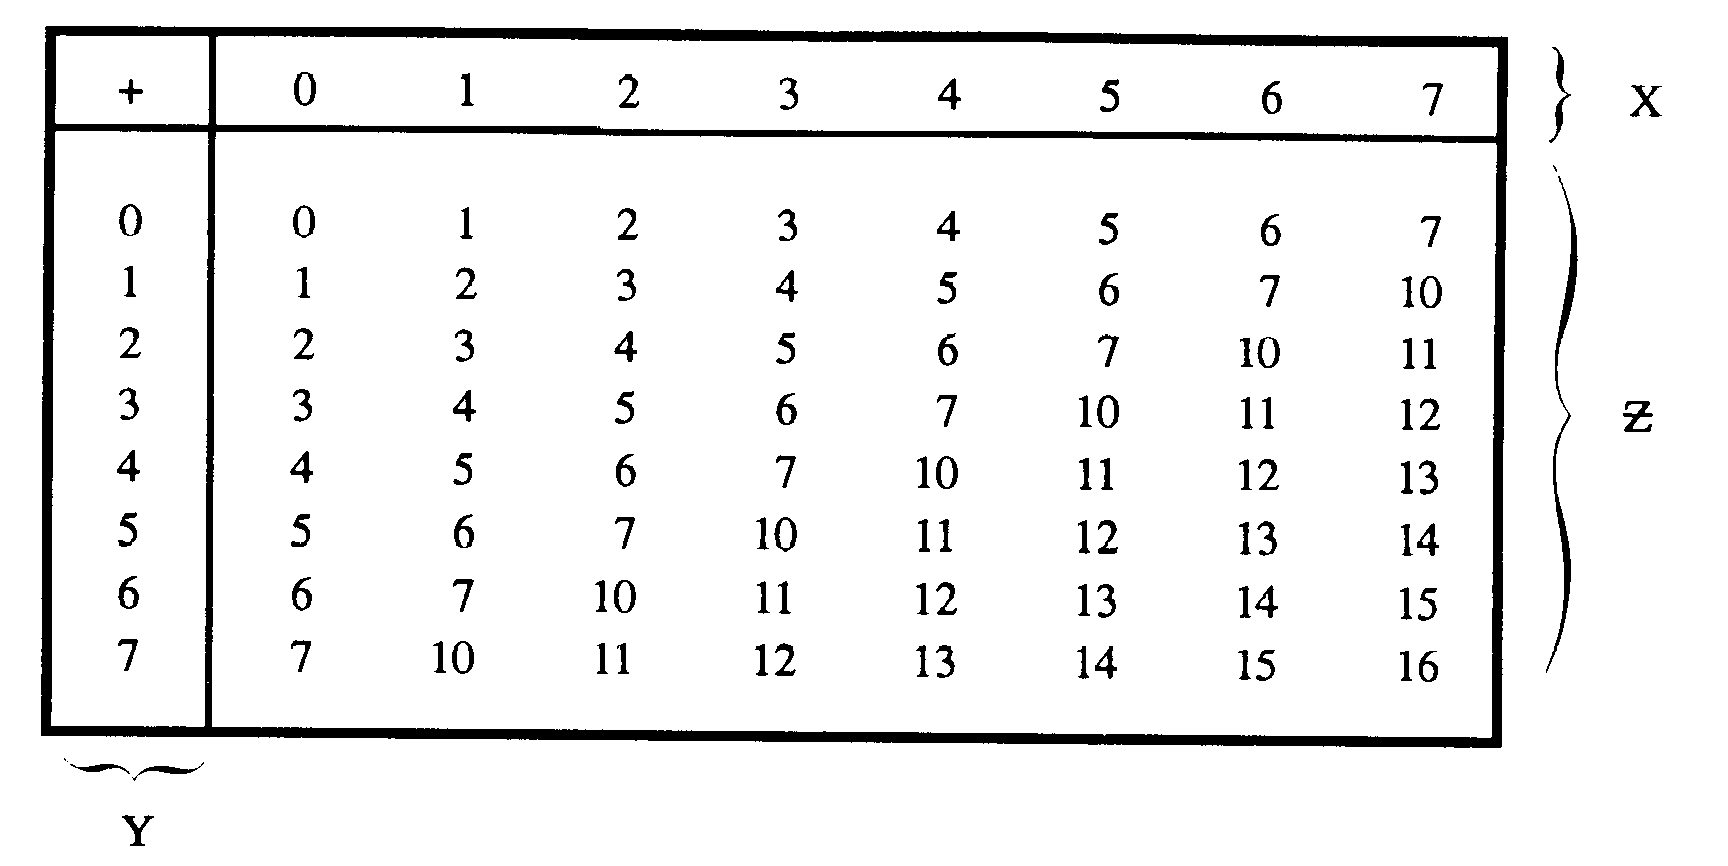 Base 4 Number System Chart